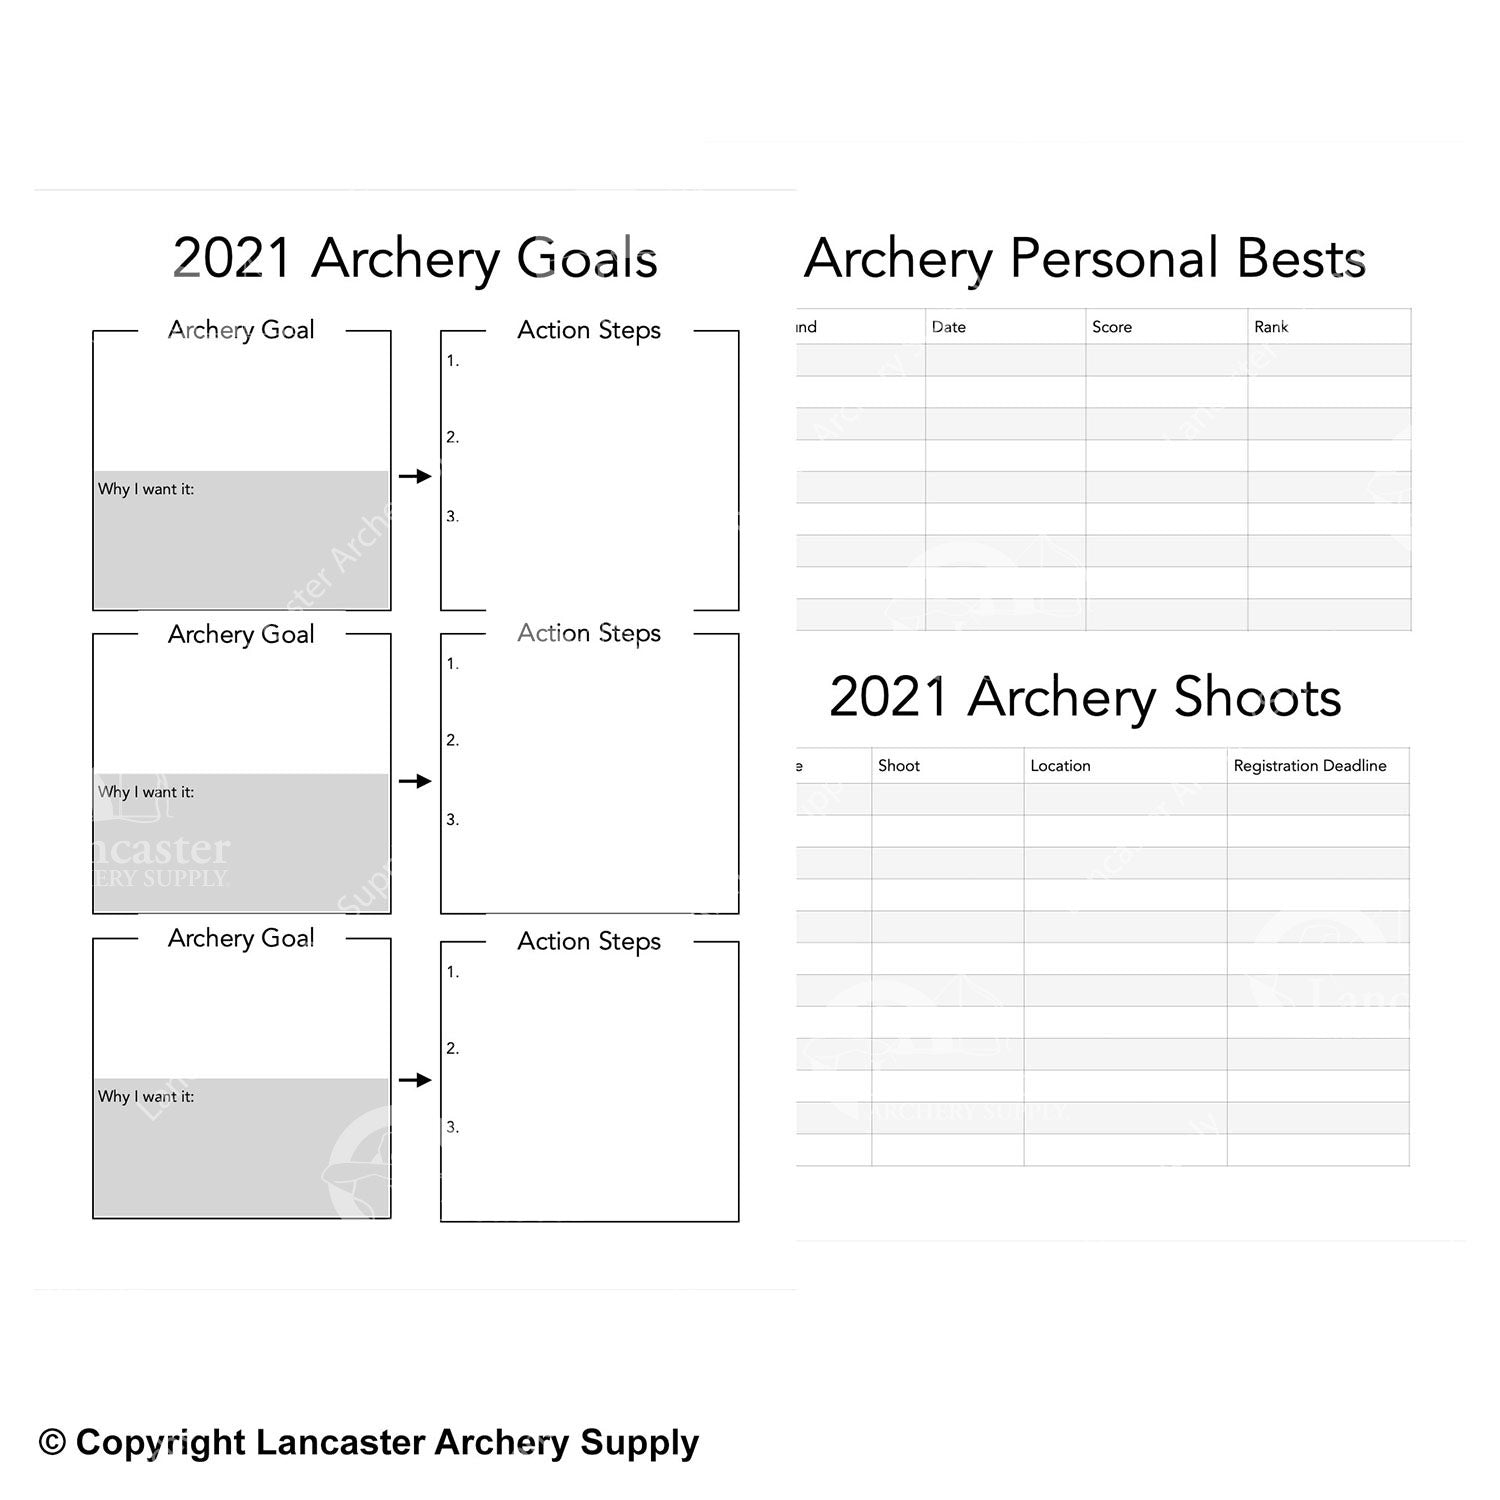 2021 Kaminski Archery Performance Planner